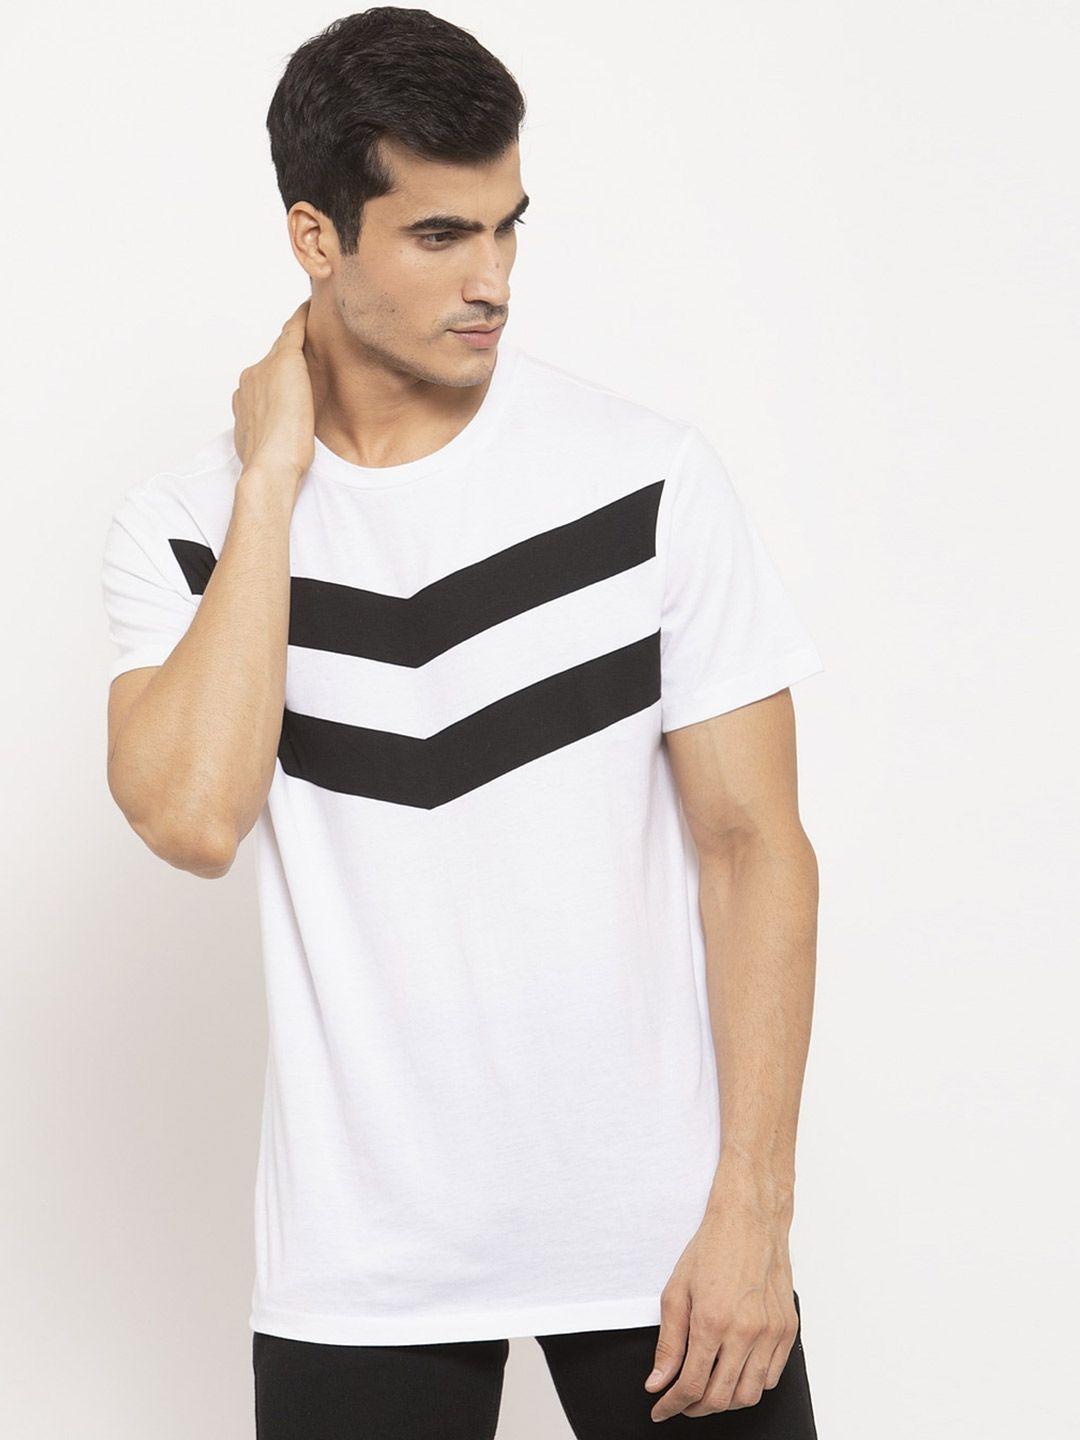 door74 men white & black striped monochrome cotton t-shirt